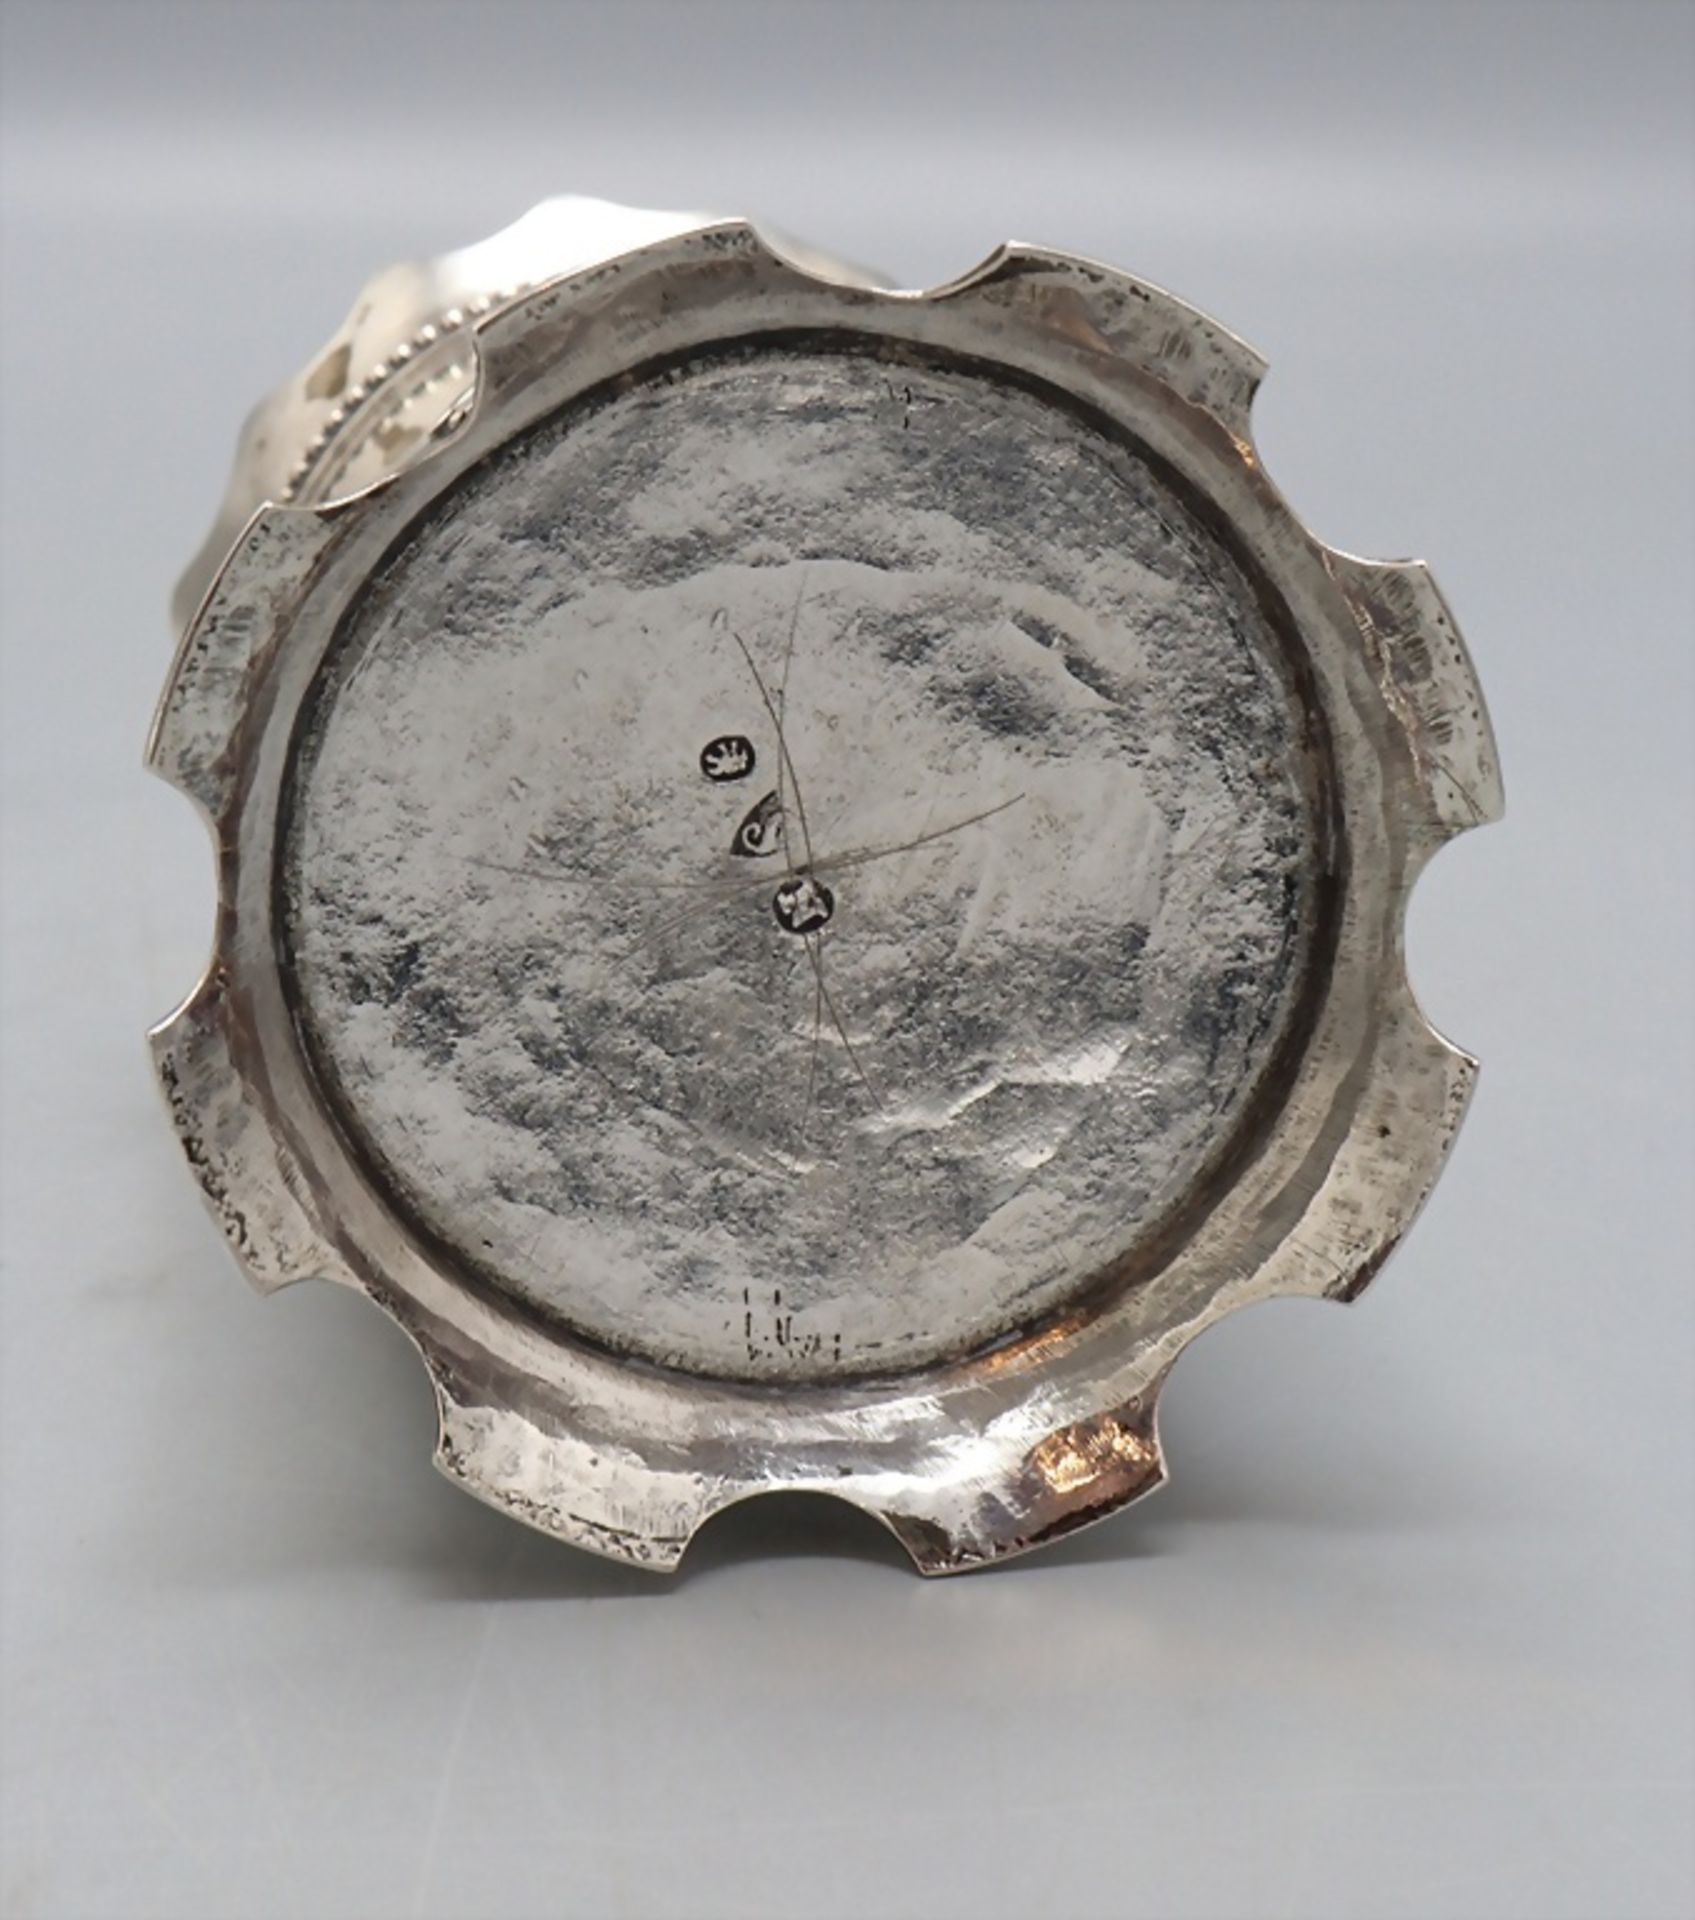 Wachsstockhalter Dose / A silver wax stick holder box, Johann Samuel Schemberg, Nürnberg, um 1800 - Image 6 of 7